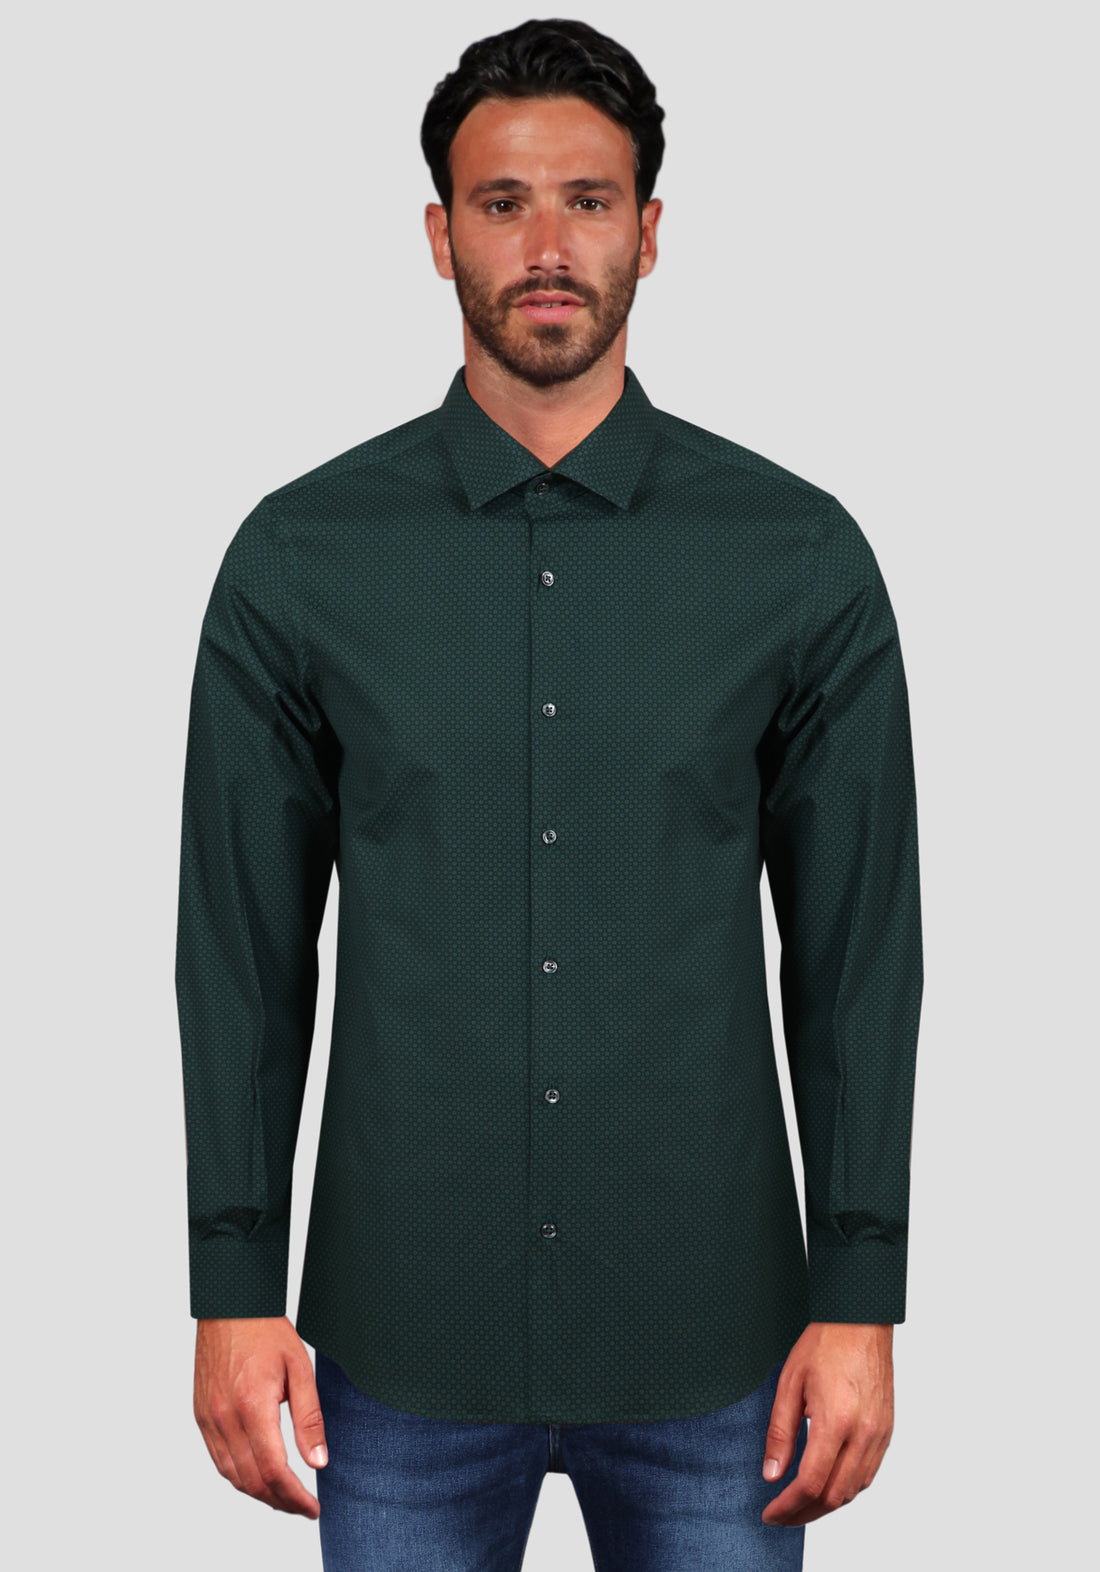 Green Micro Patterned Shirt